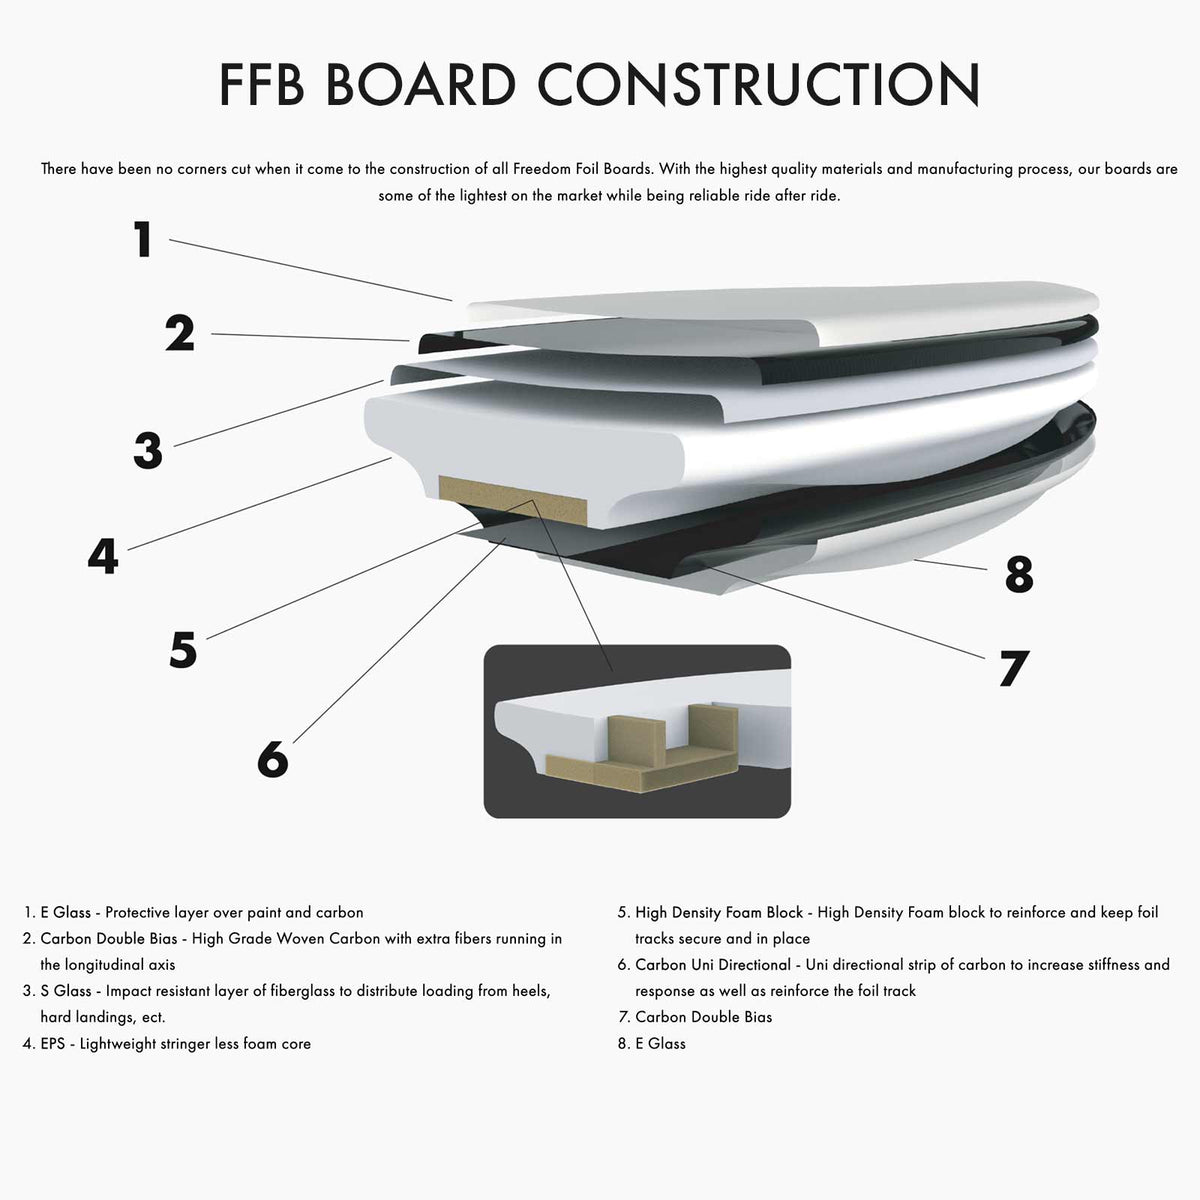 FFB Board Construction